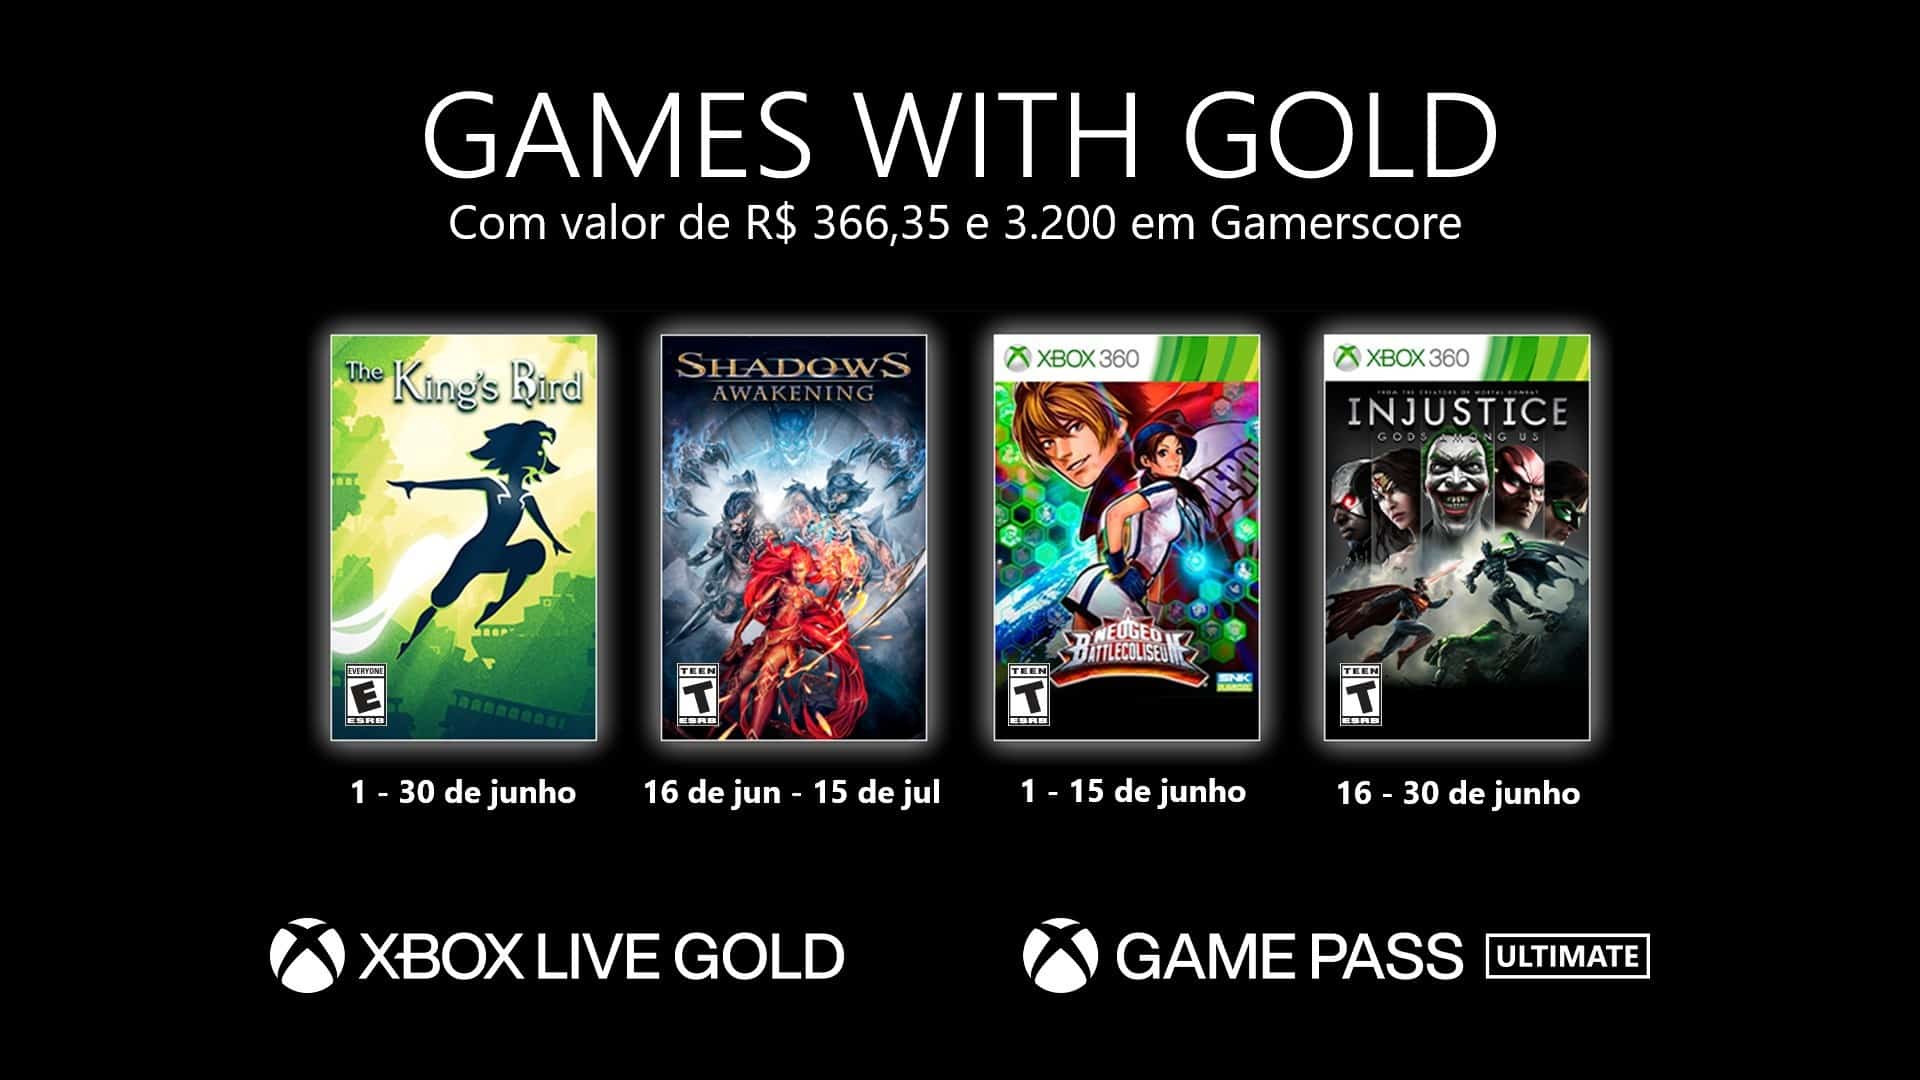 Xbox game pass: stardew valley entra e gta 5 está fora | 6e8b1aac | console, microsoft, pc, stardew valley, xbox, xbox game pass | xbox game pass notícias